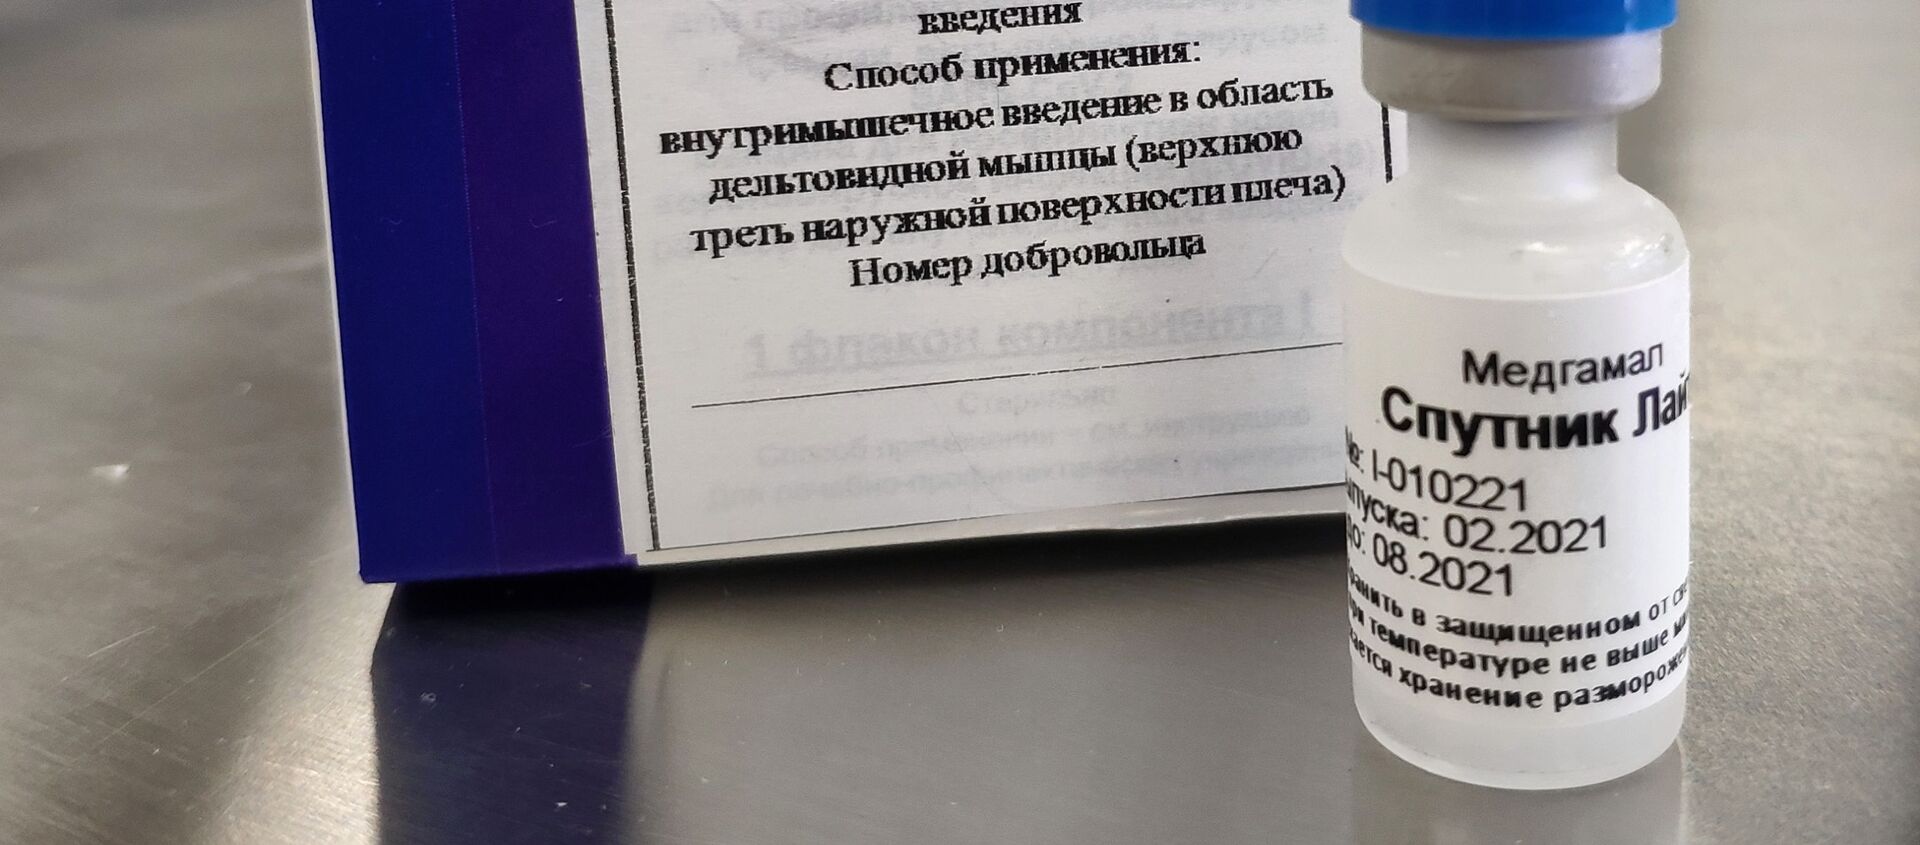 Упаковка однокомпонентной вакцины от COVID-19 Спутник Лайт - 俄羅斯衛星通訊社, 1920, 15.05.2021